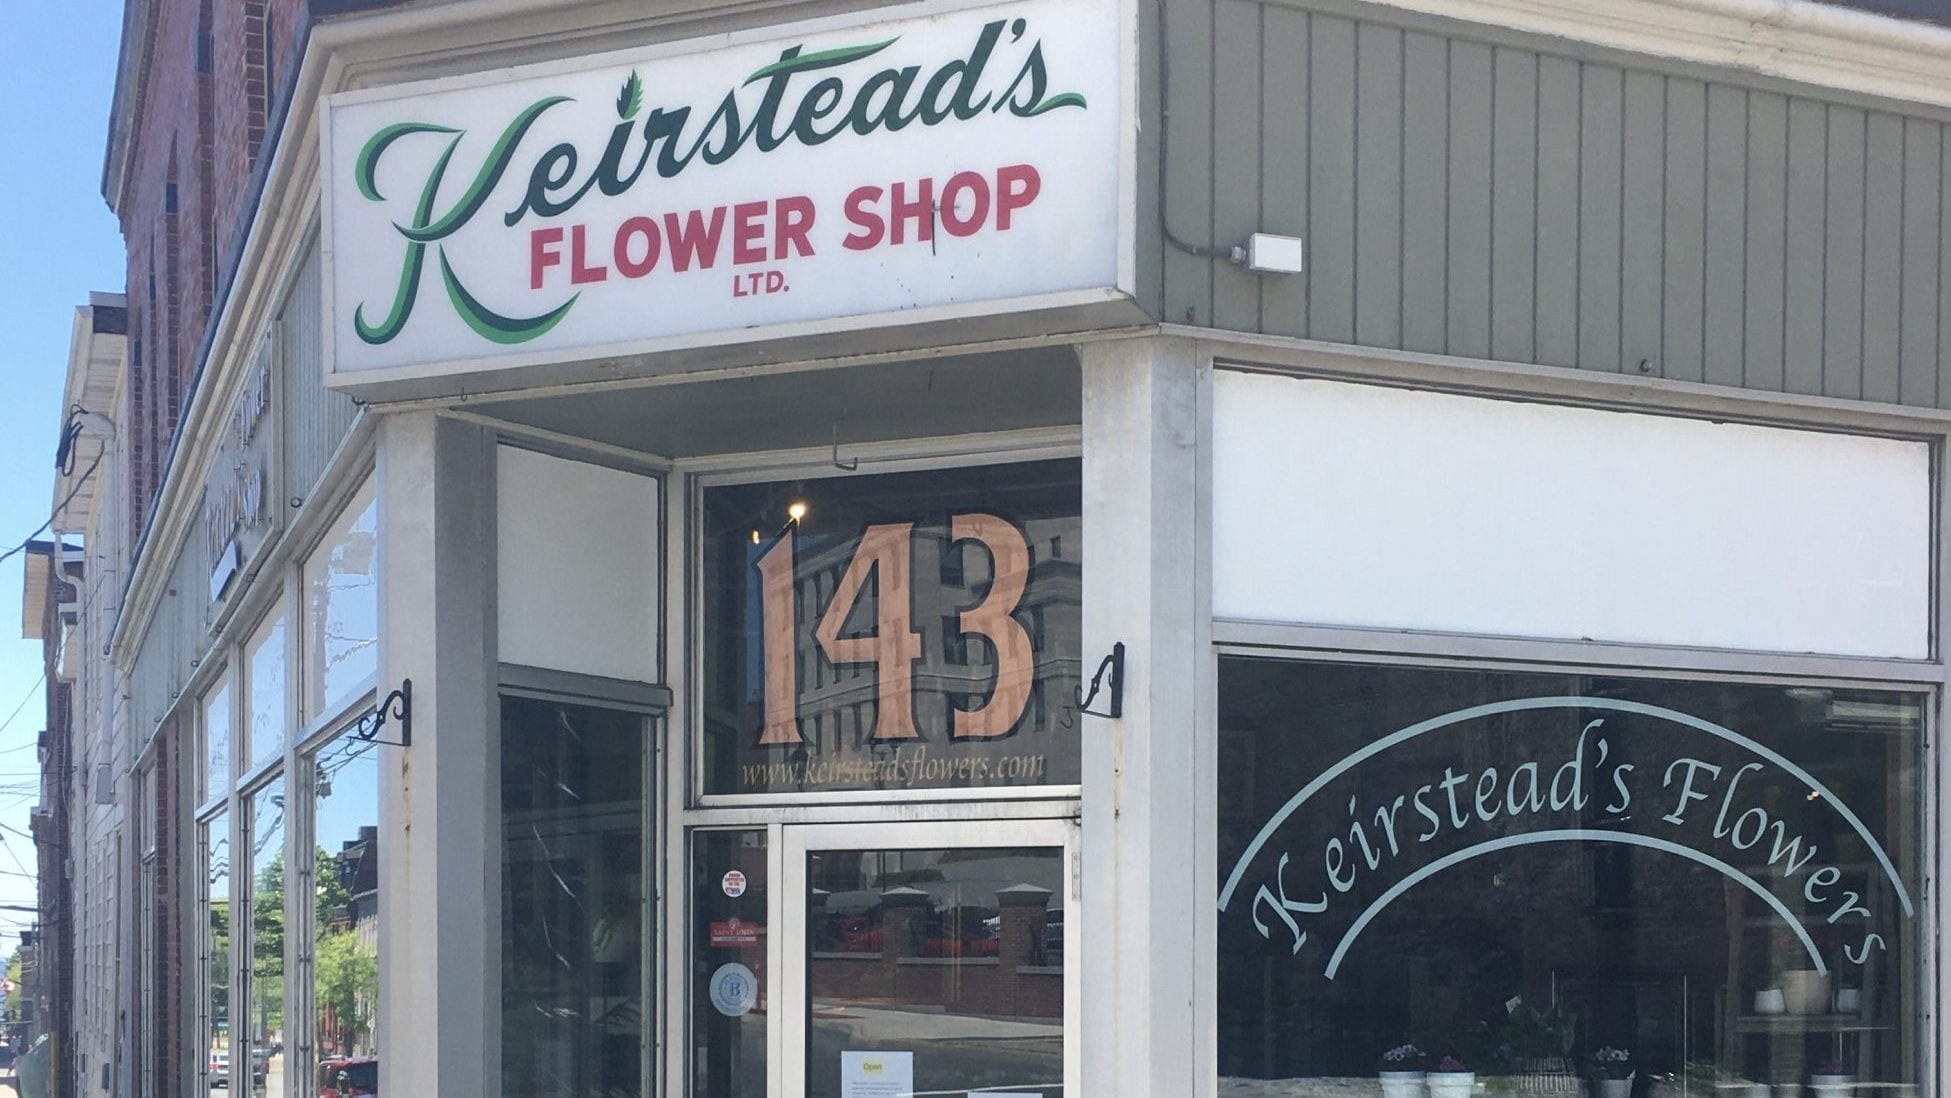 Keirstead’s Flower Shop Still Has Strong Saint John Roots